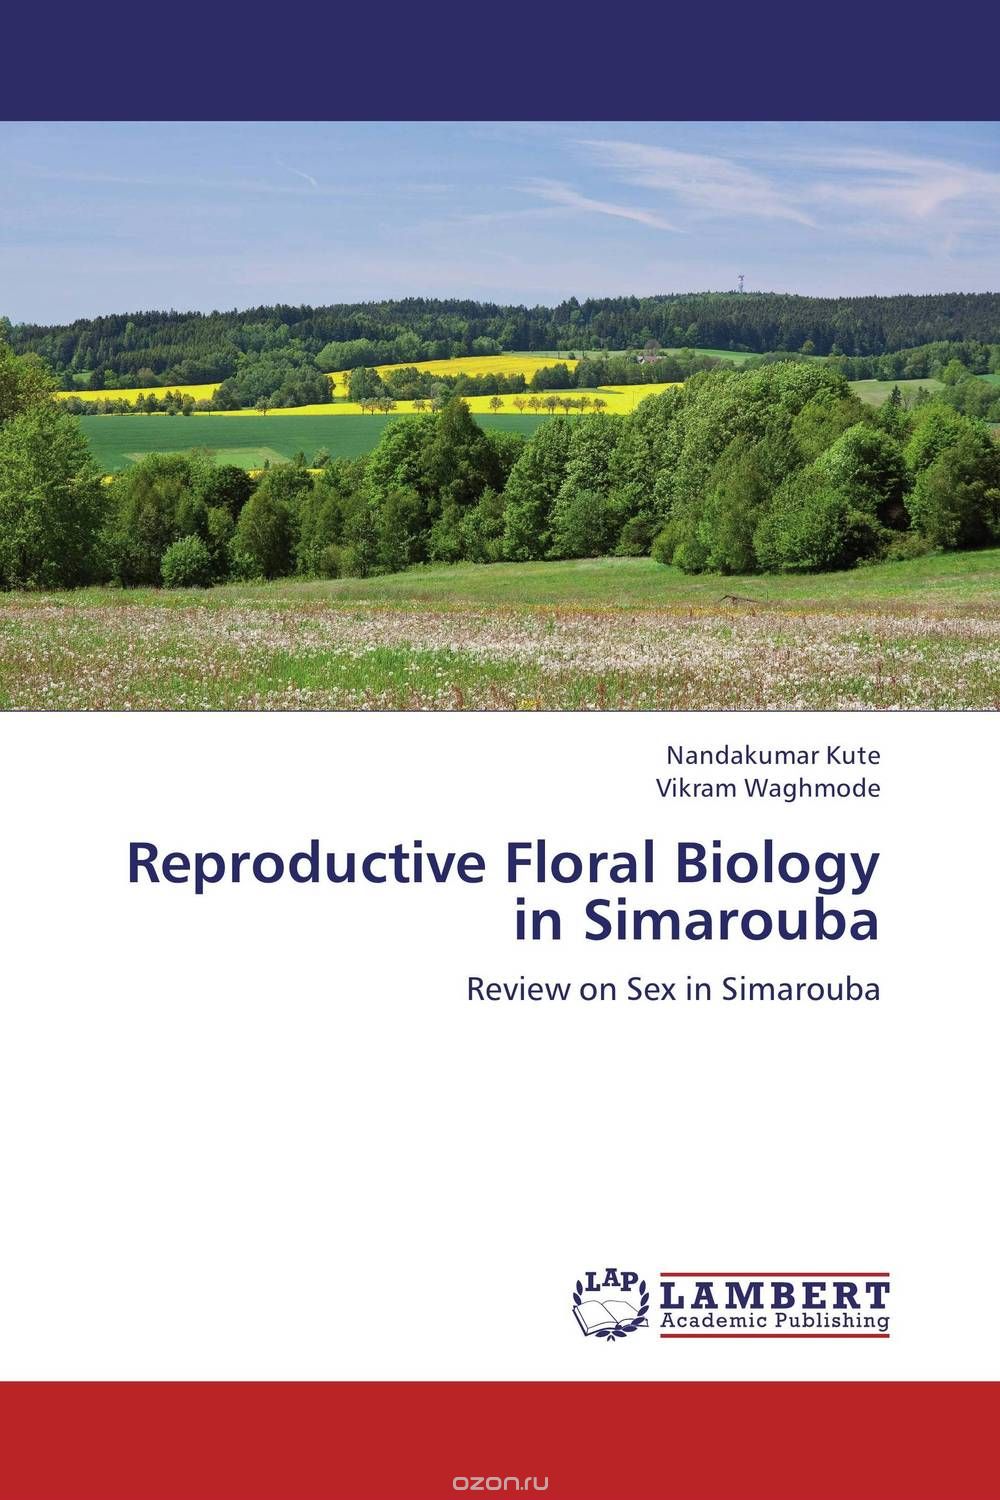 Скачать книгу "Reproductive Floral Biology in Simarouba"